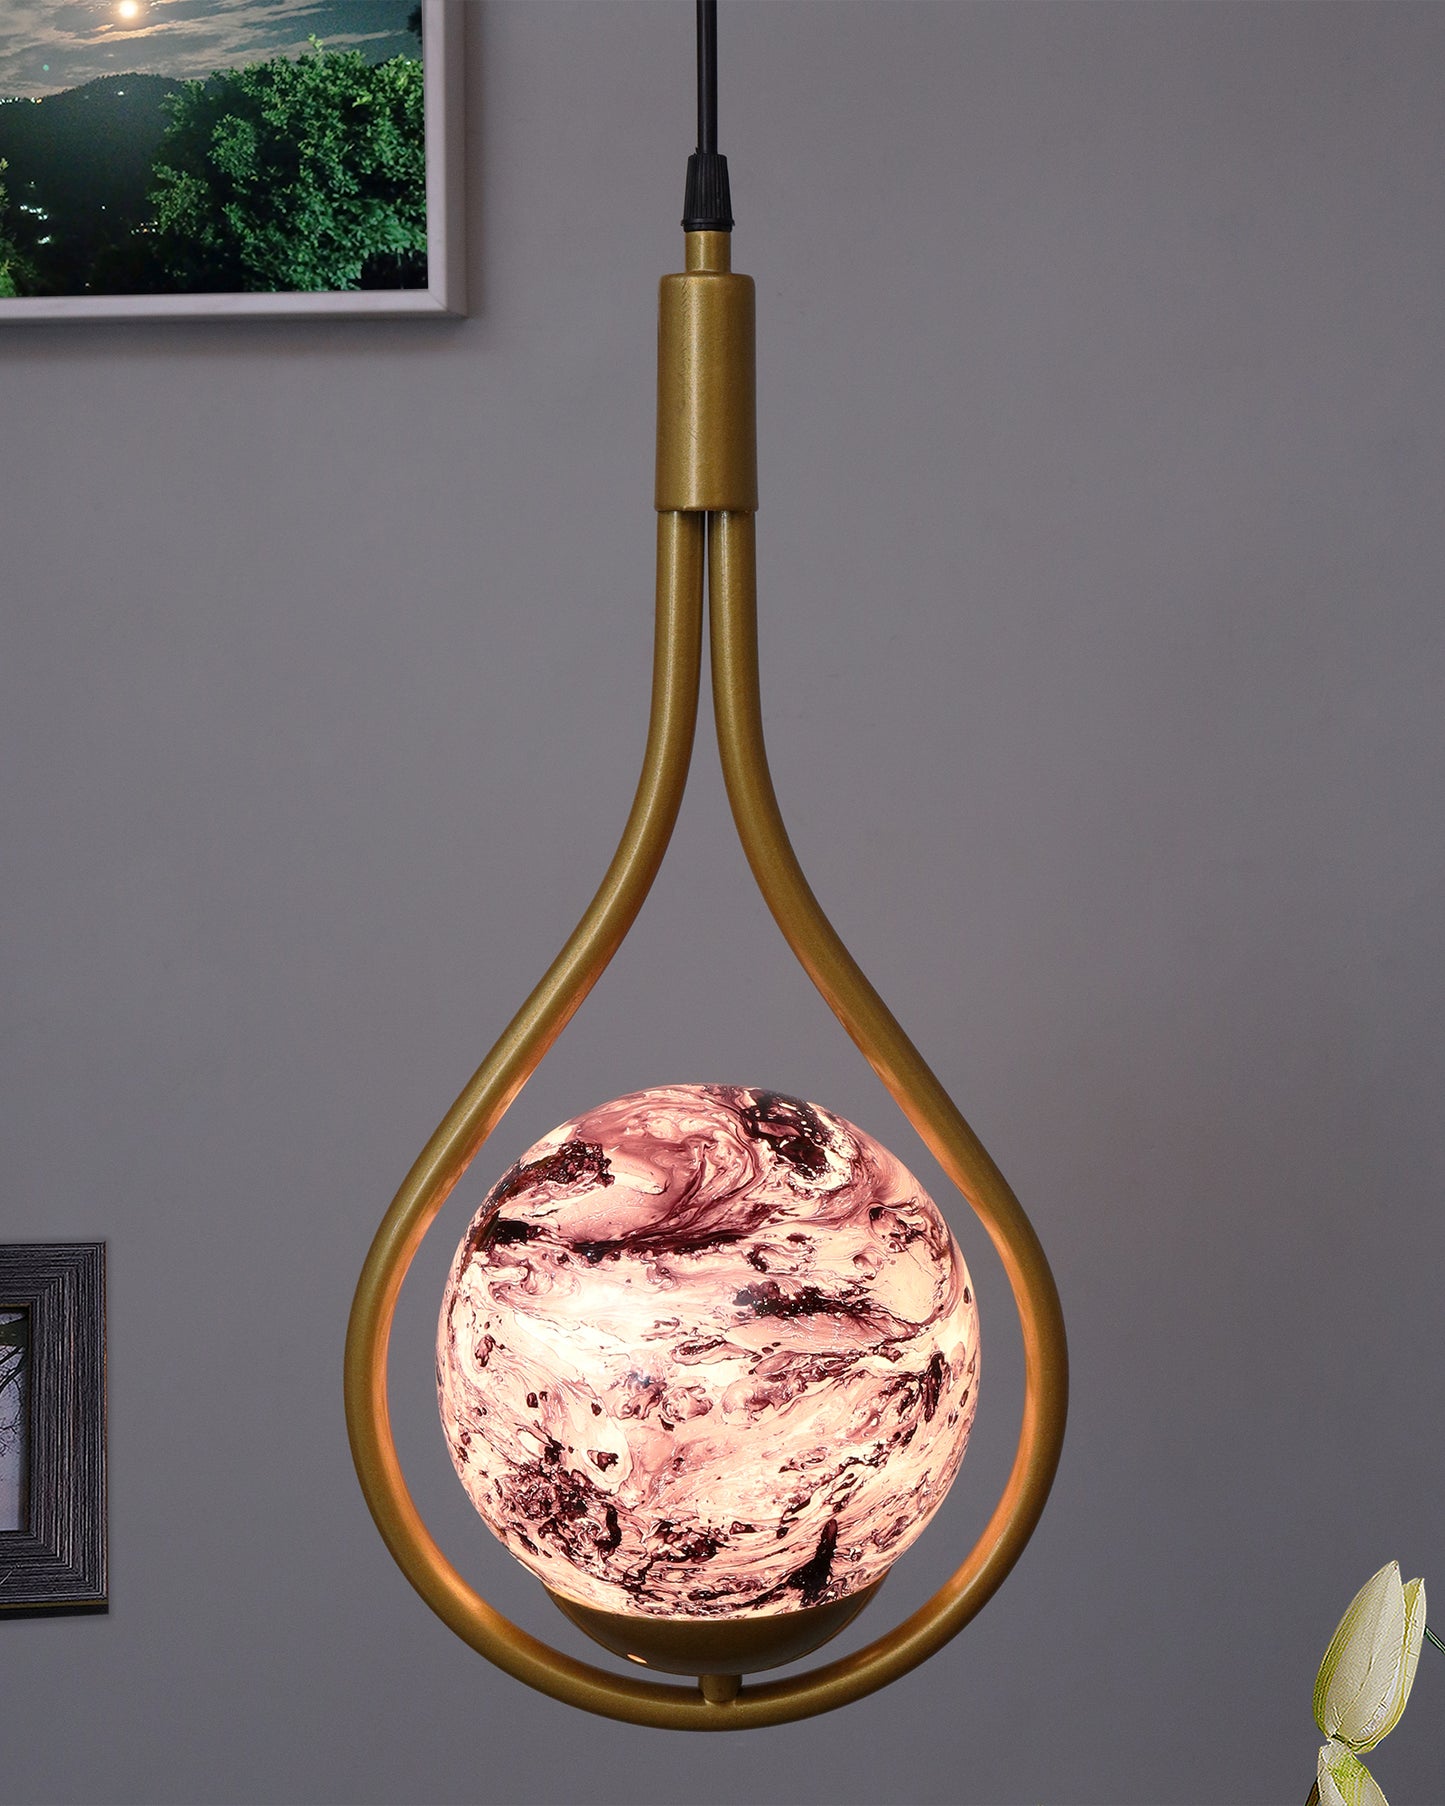 Mid Century Modern Golden Light Chandelier , Planet Series Frosted Glass Globe Lampshade Pendant Indoor Hanging Light Fixture, Water Drop